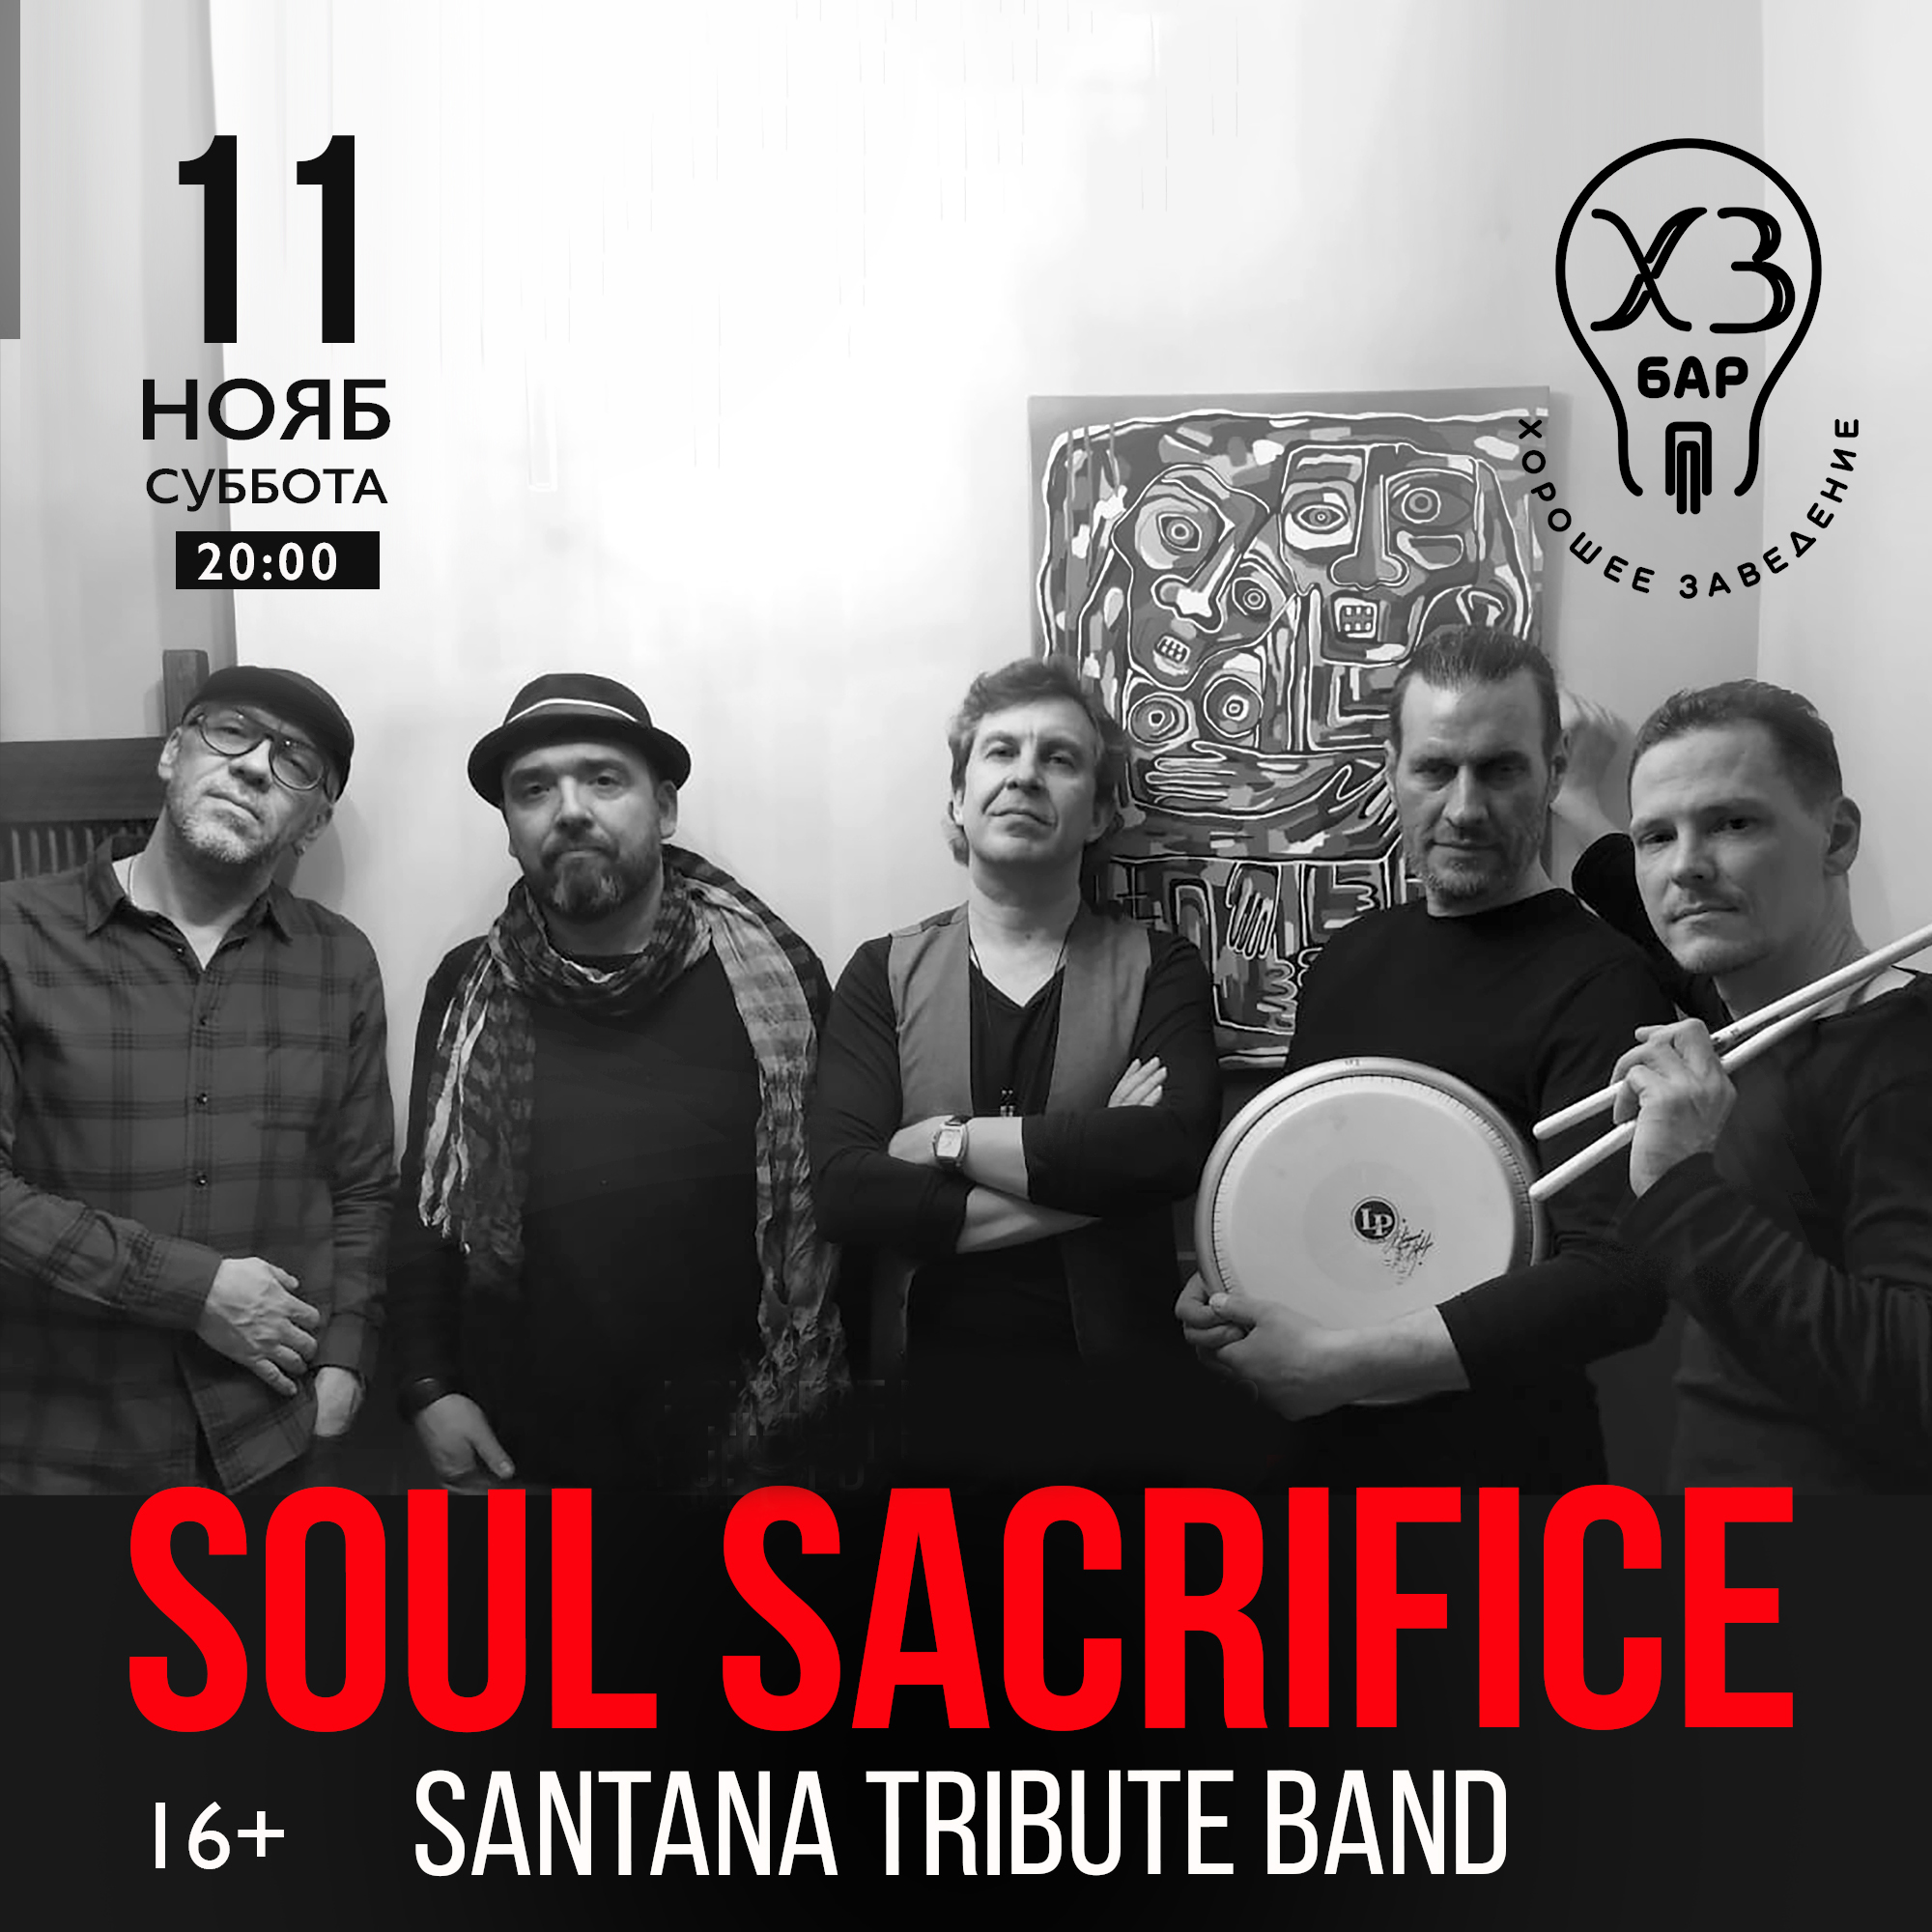 SOUL SACRIFICE Santana tribute band